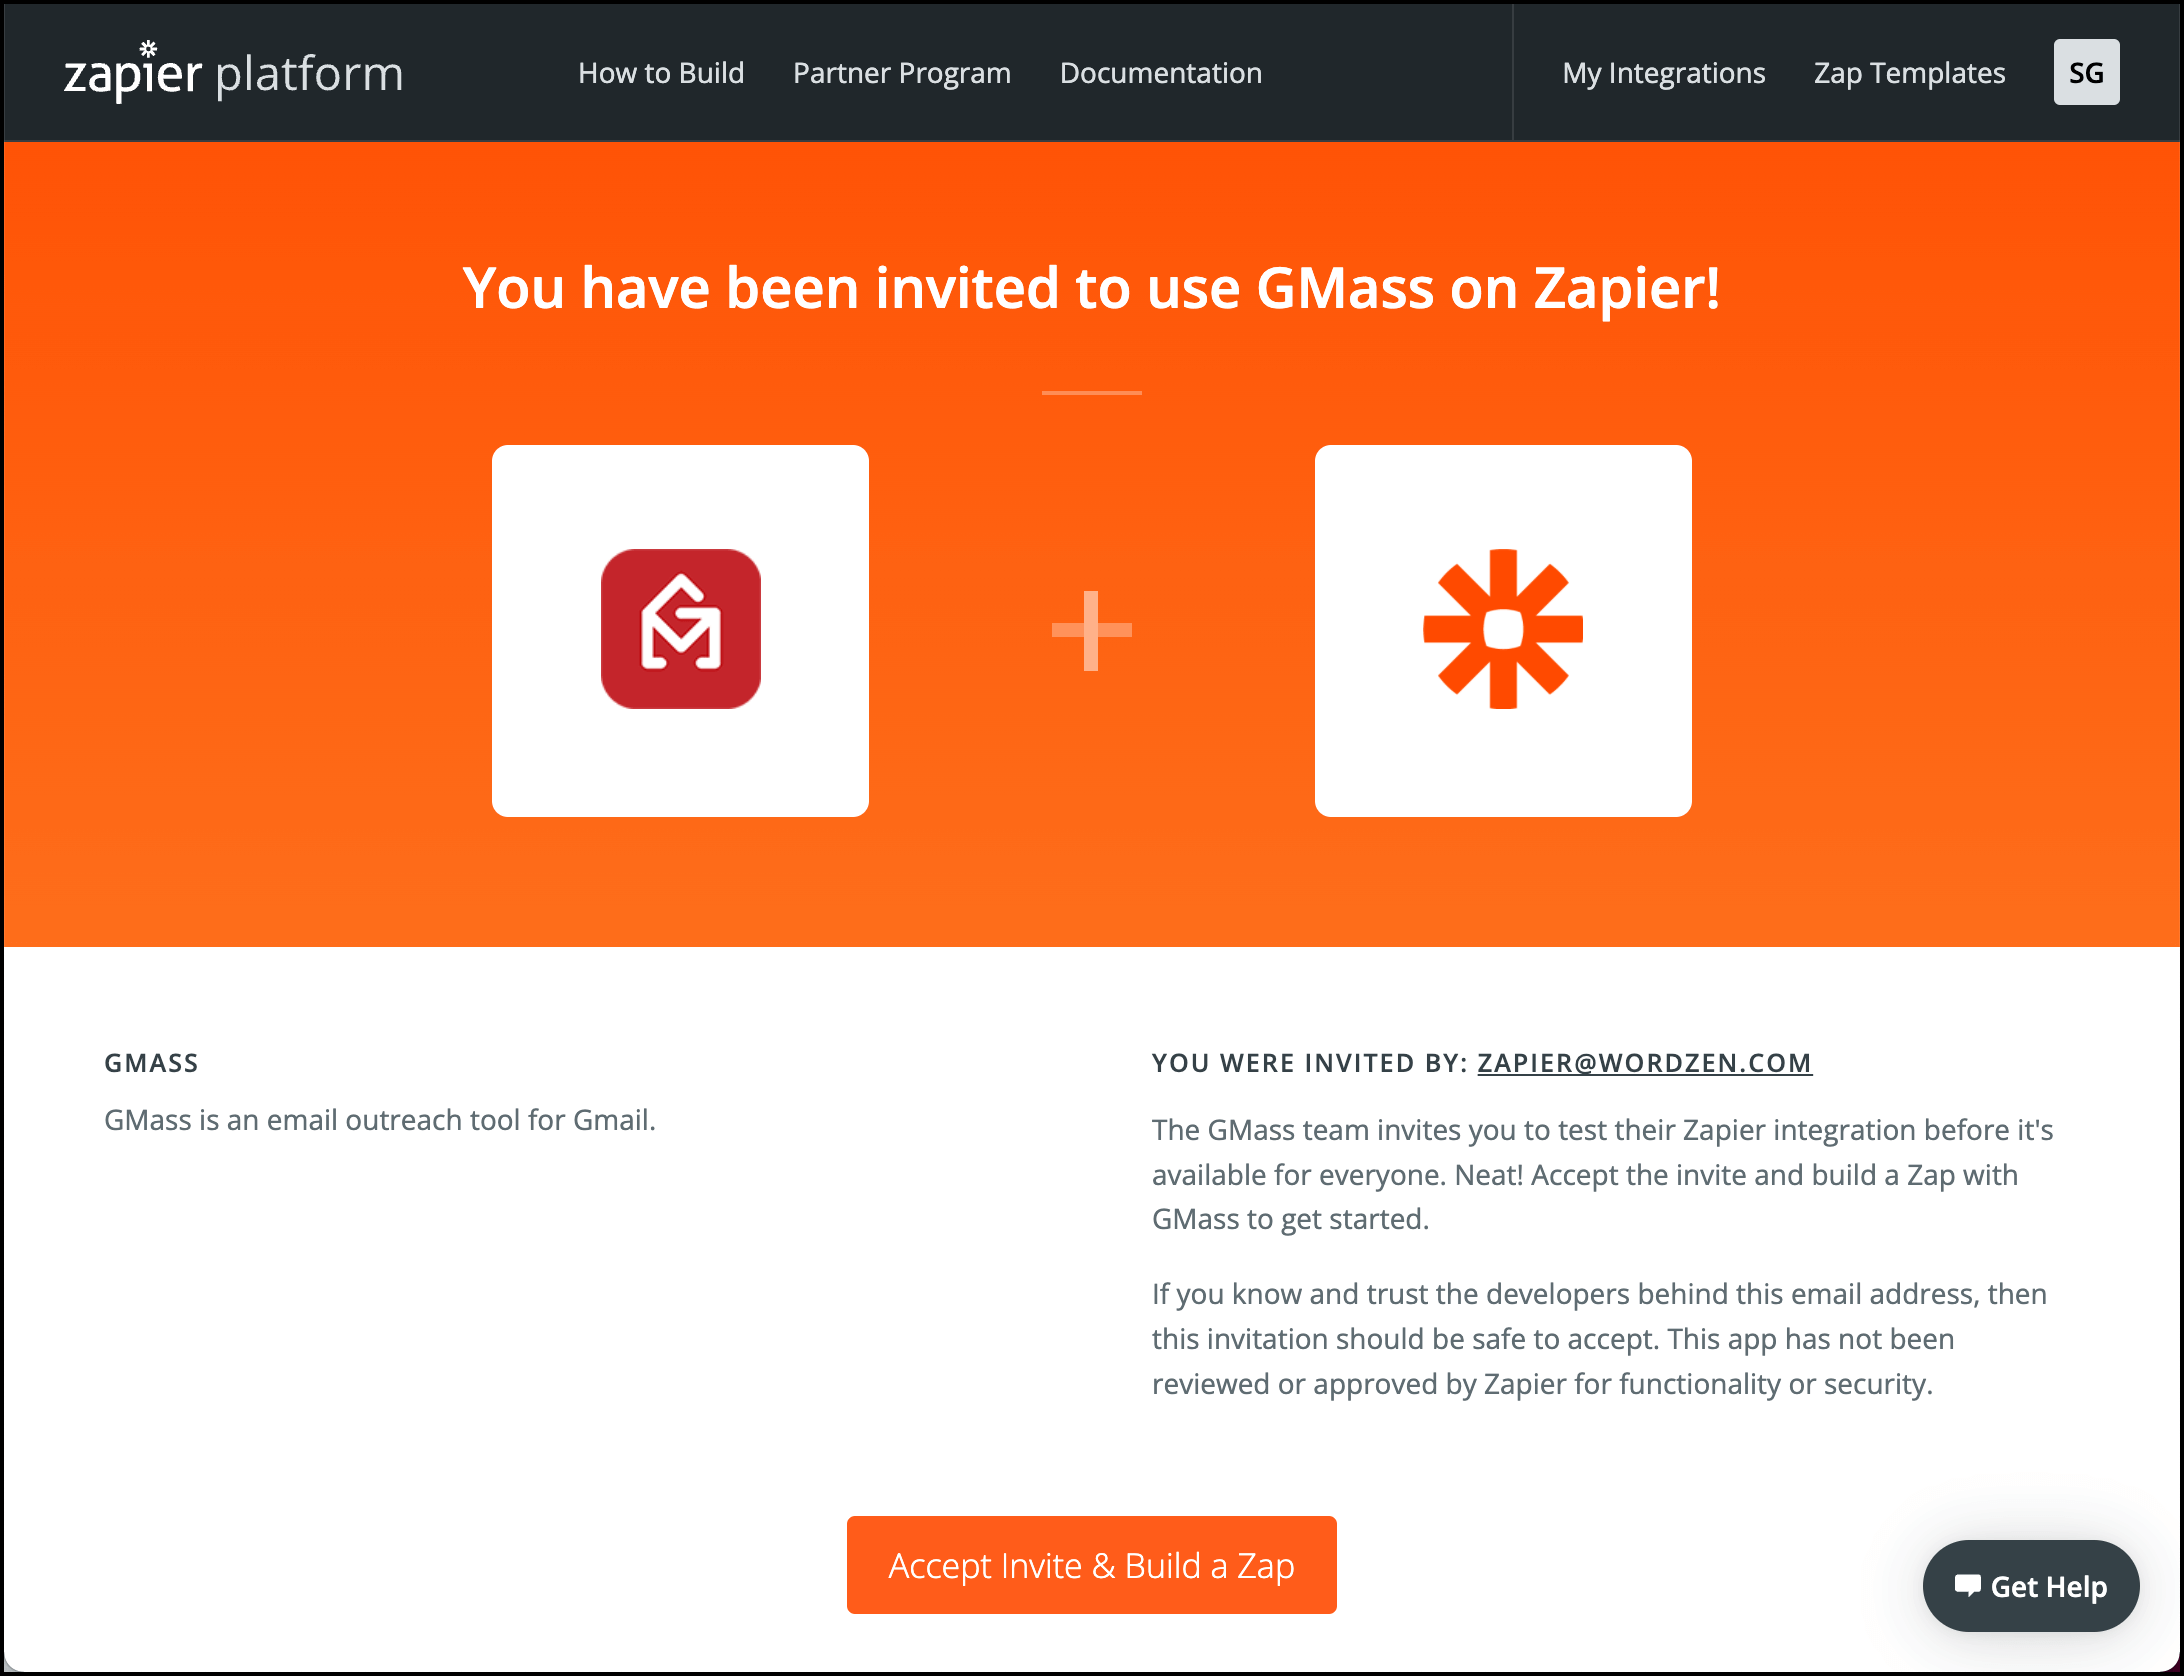 Follow the link to the GMass-Zapier public beta